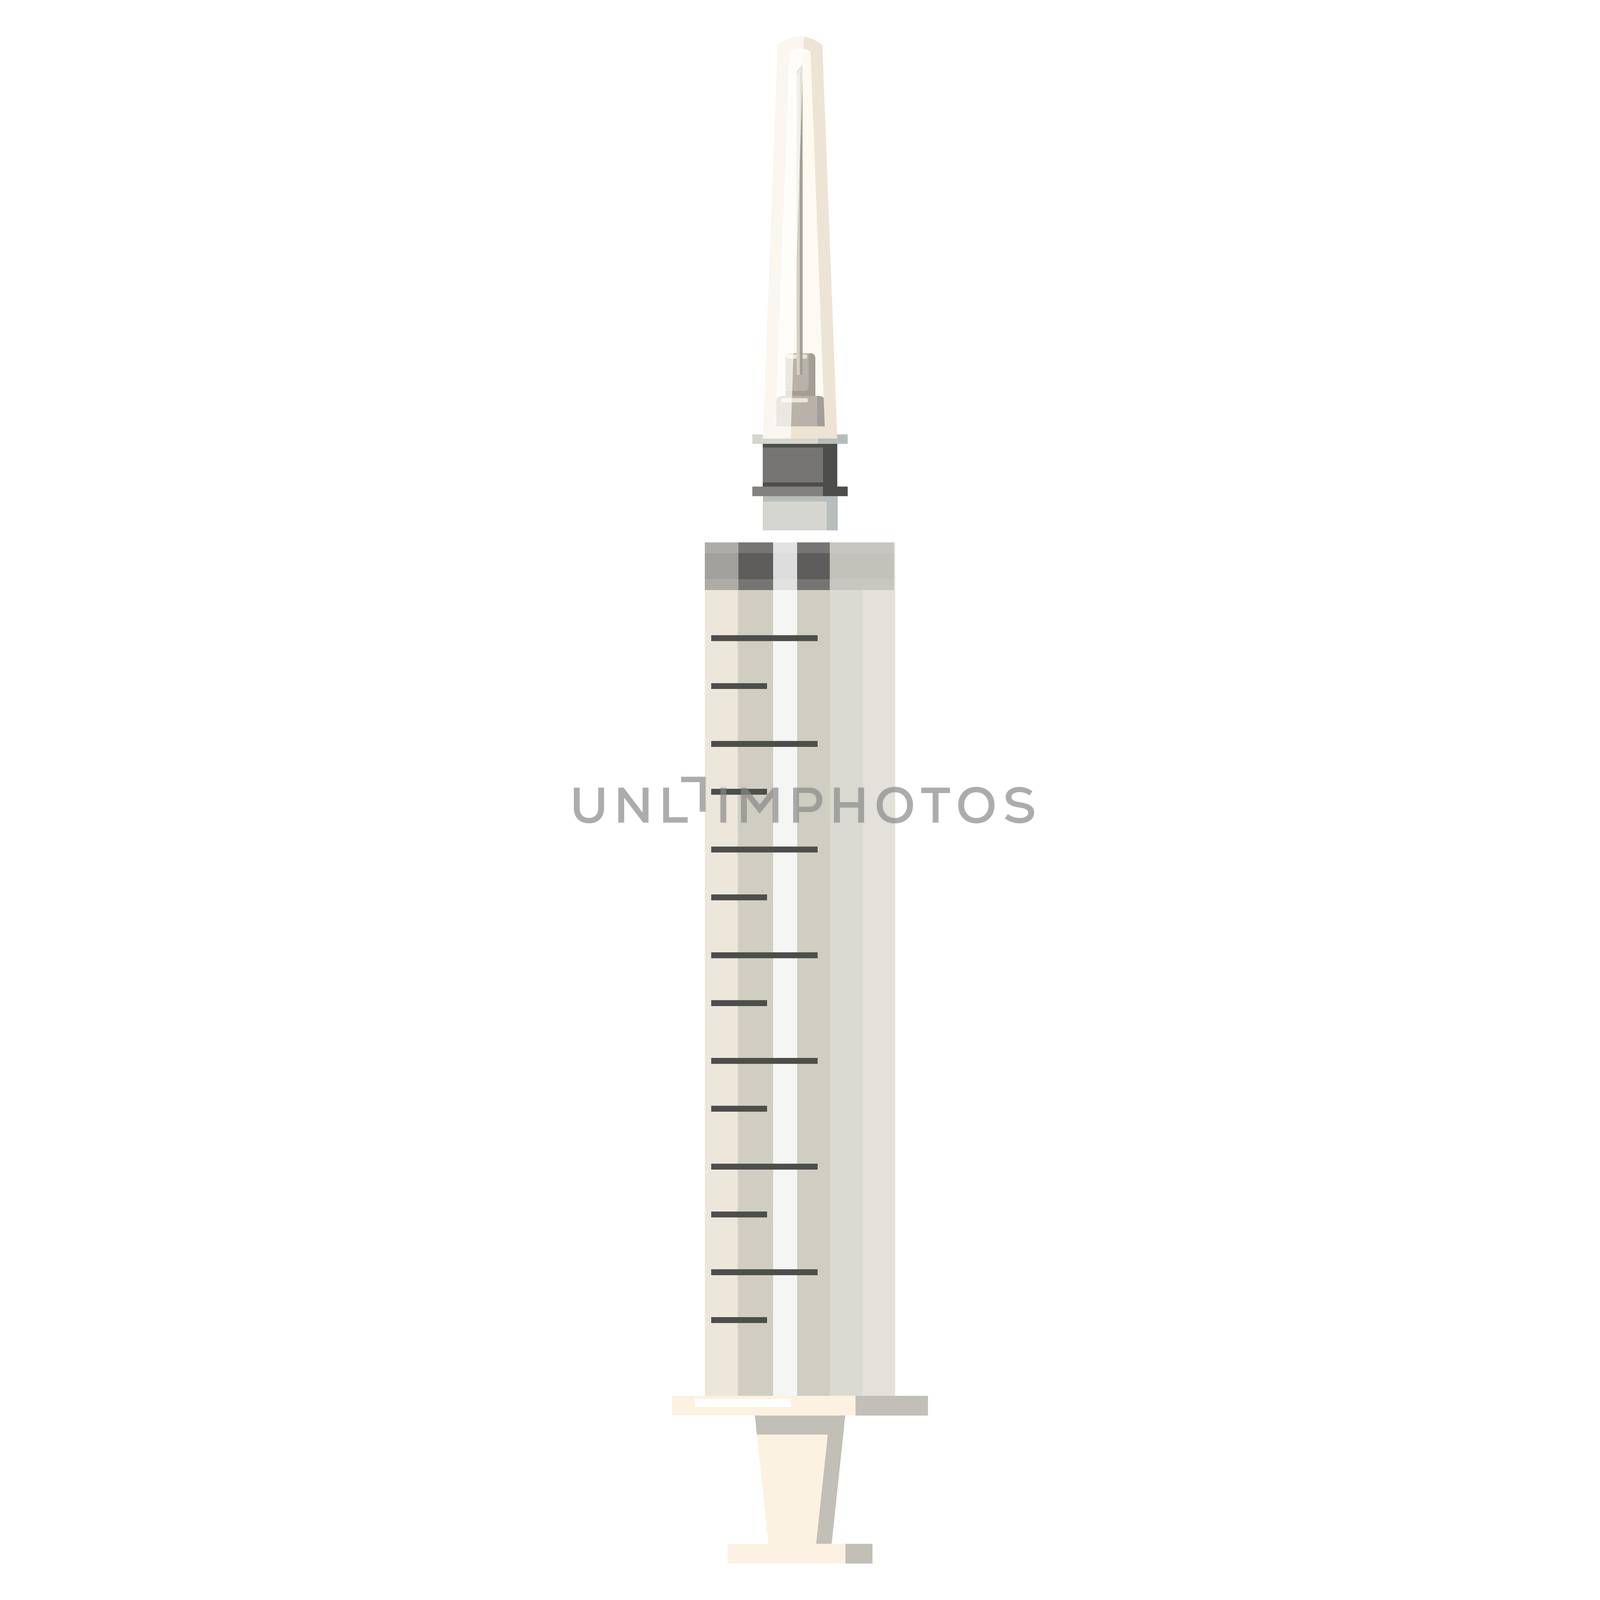 Syringe icon in cartoon style on a white background